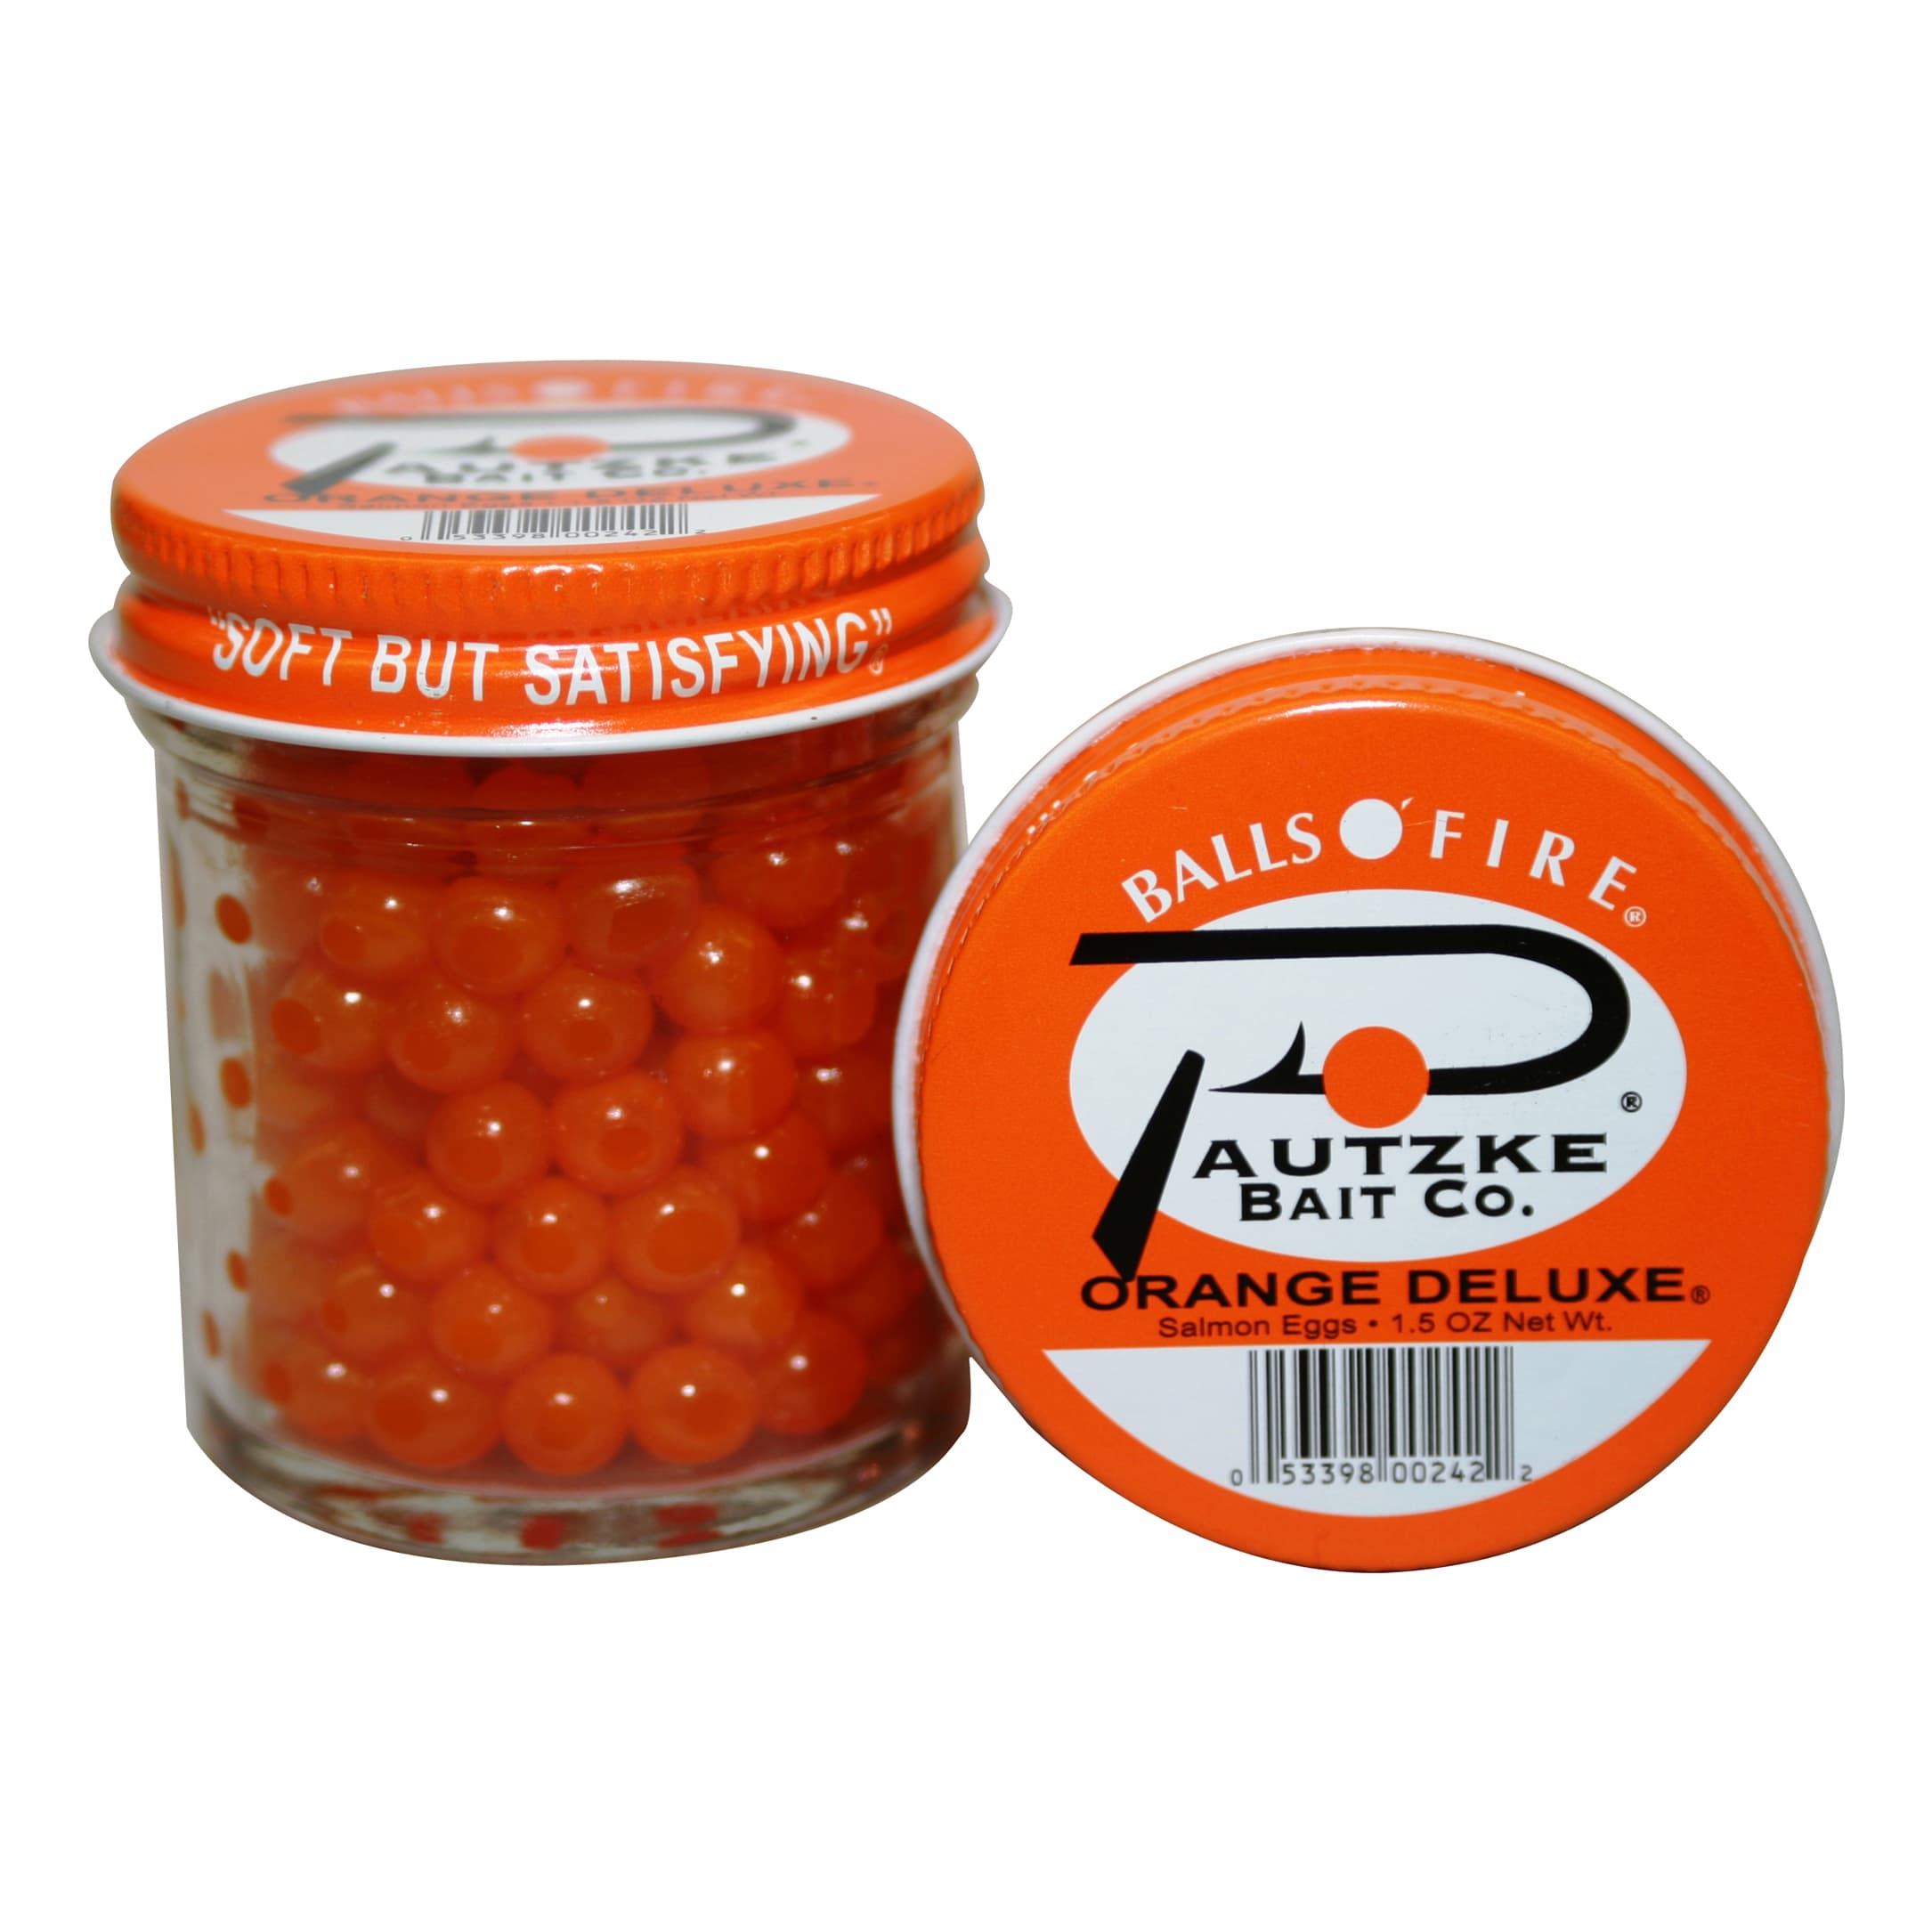 Pautzke Bait Co. Balls O' Fire® Salmon Eggs - Orange Label®